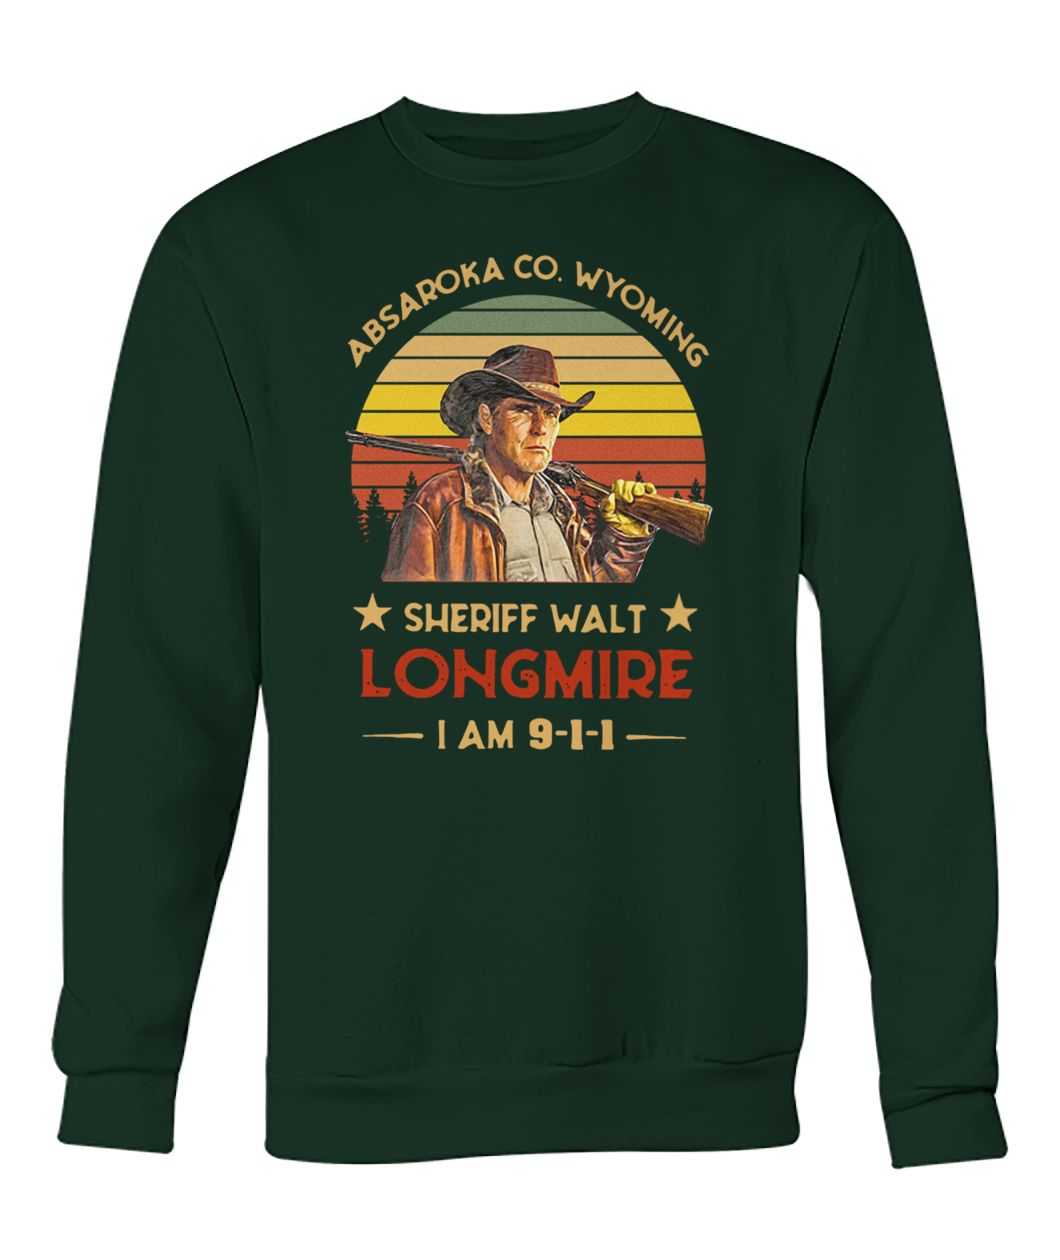 Craig johnson absaroka co wyoming sheriff walt longmire I am 9 1 1 vintage crew neck sweatshirt